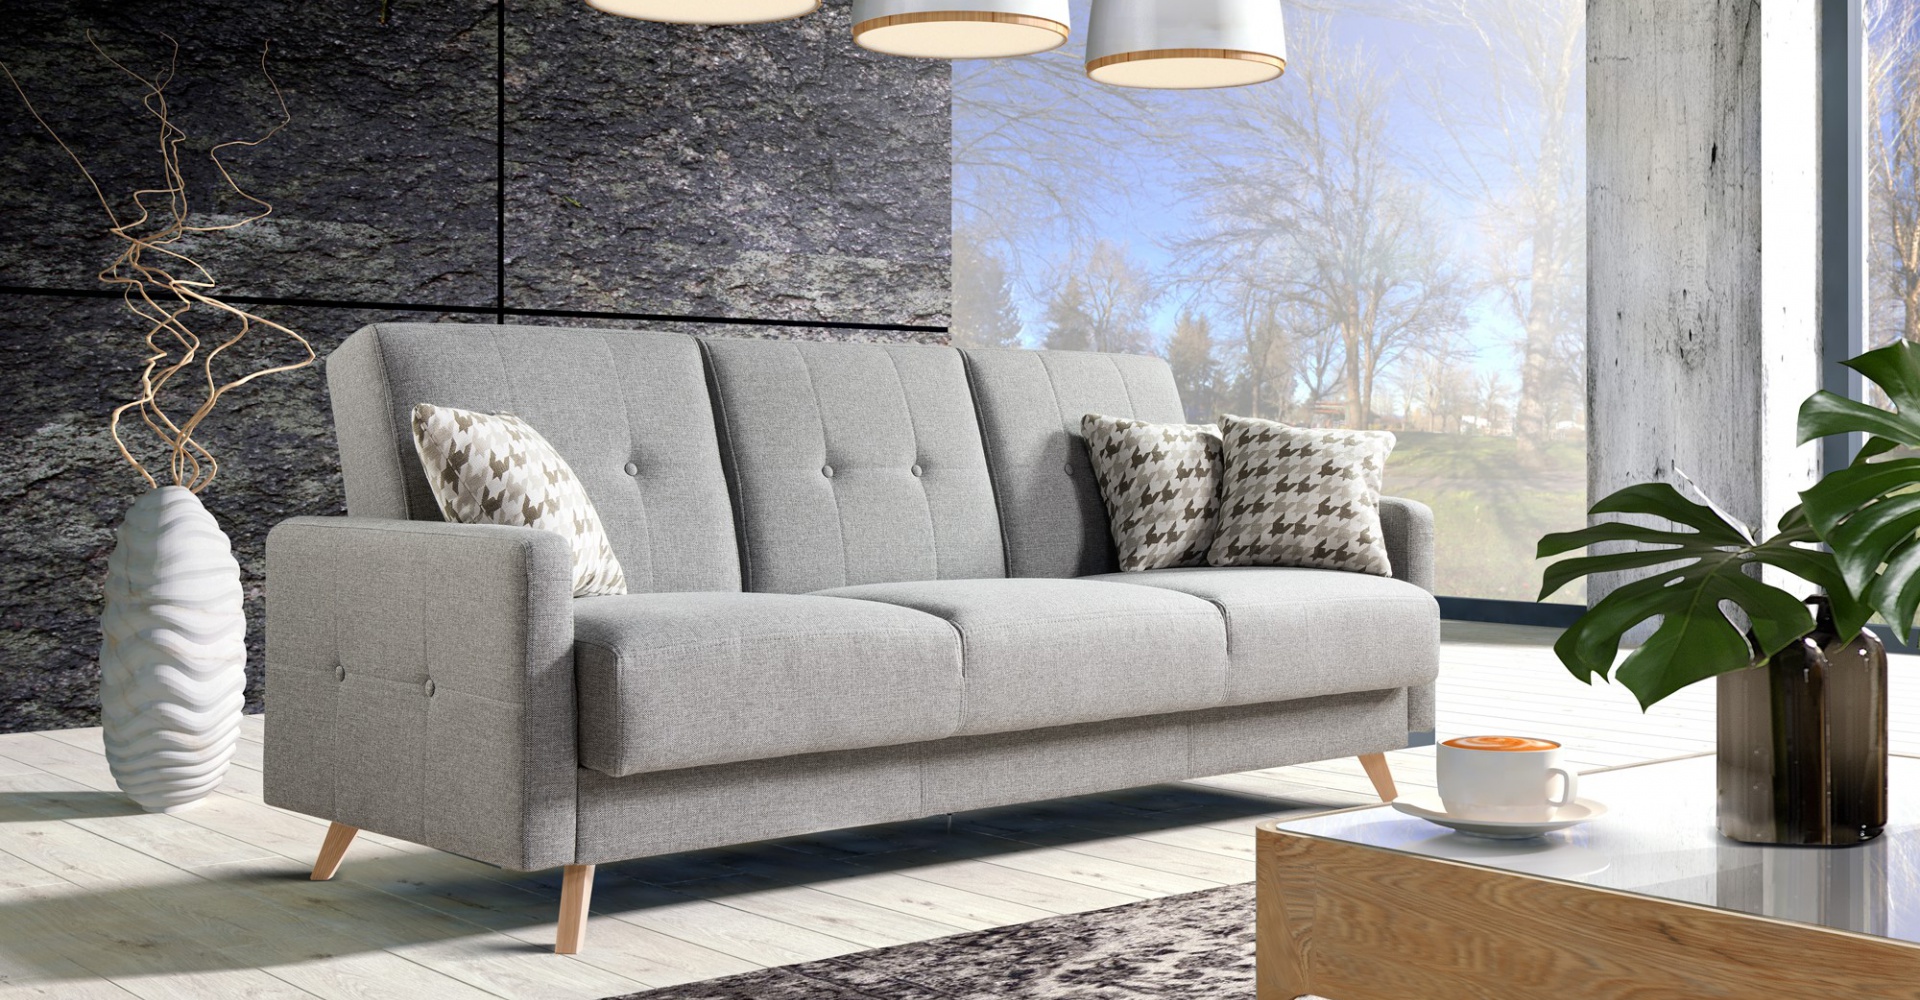 Sofa SCANDI w modnym skandynawskim stylu.